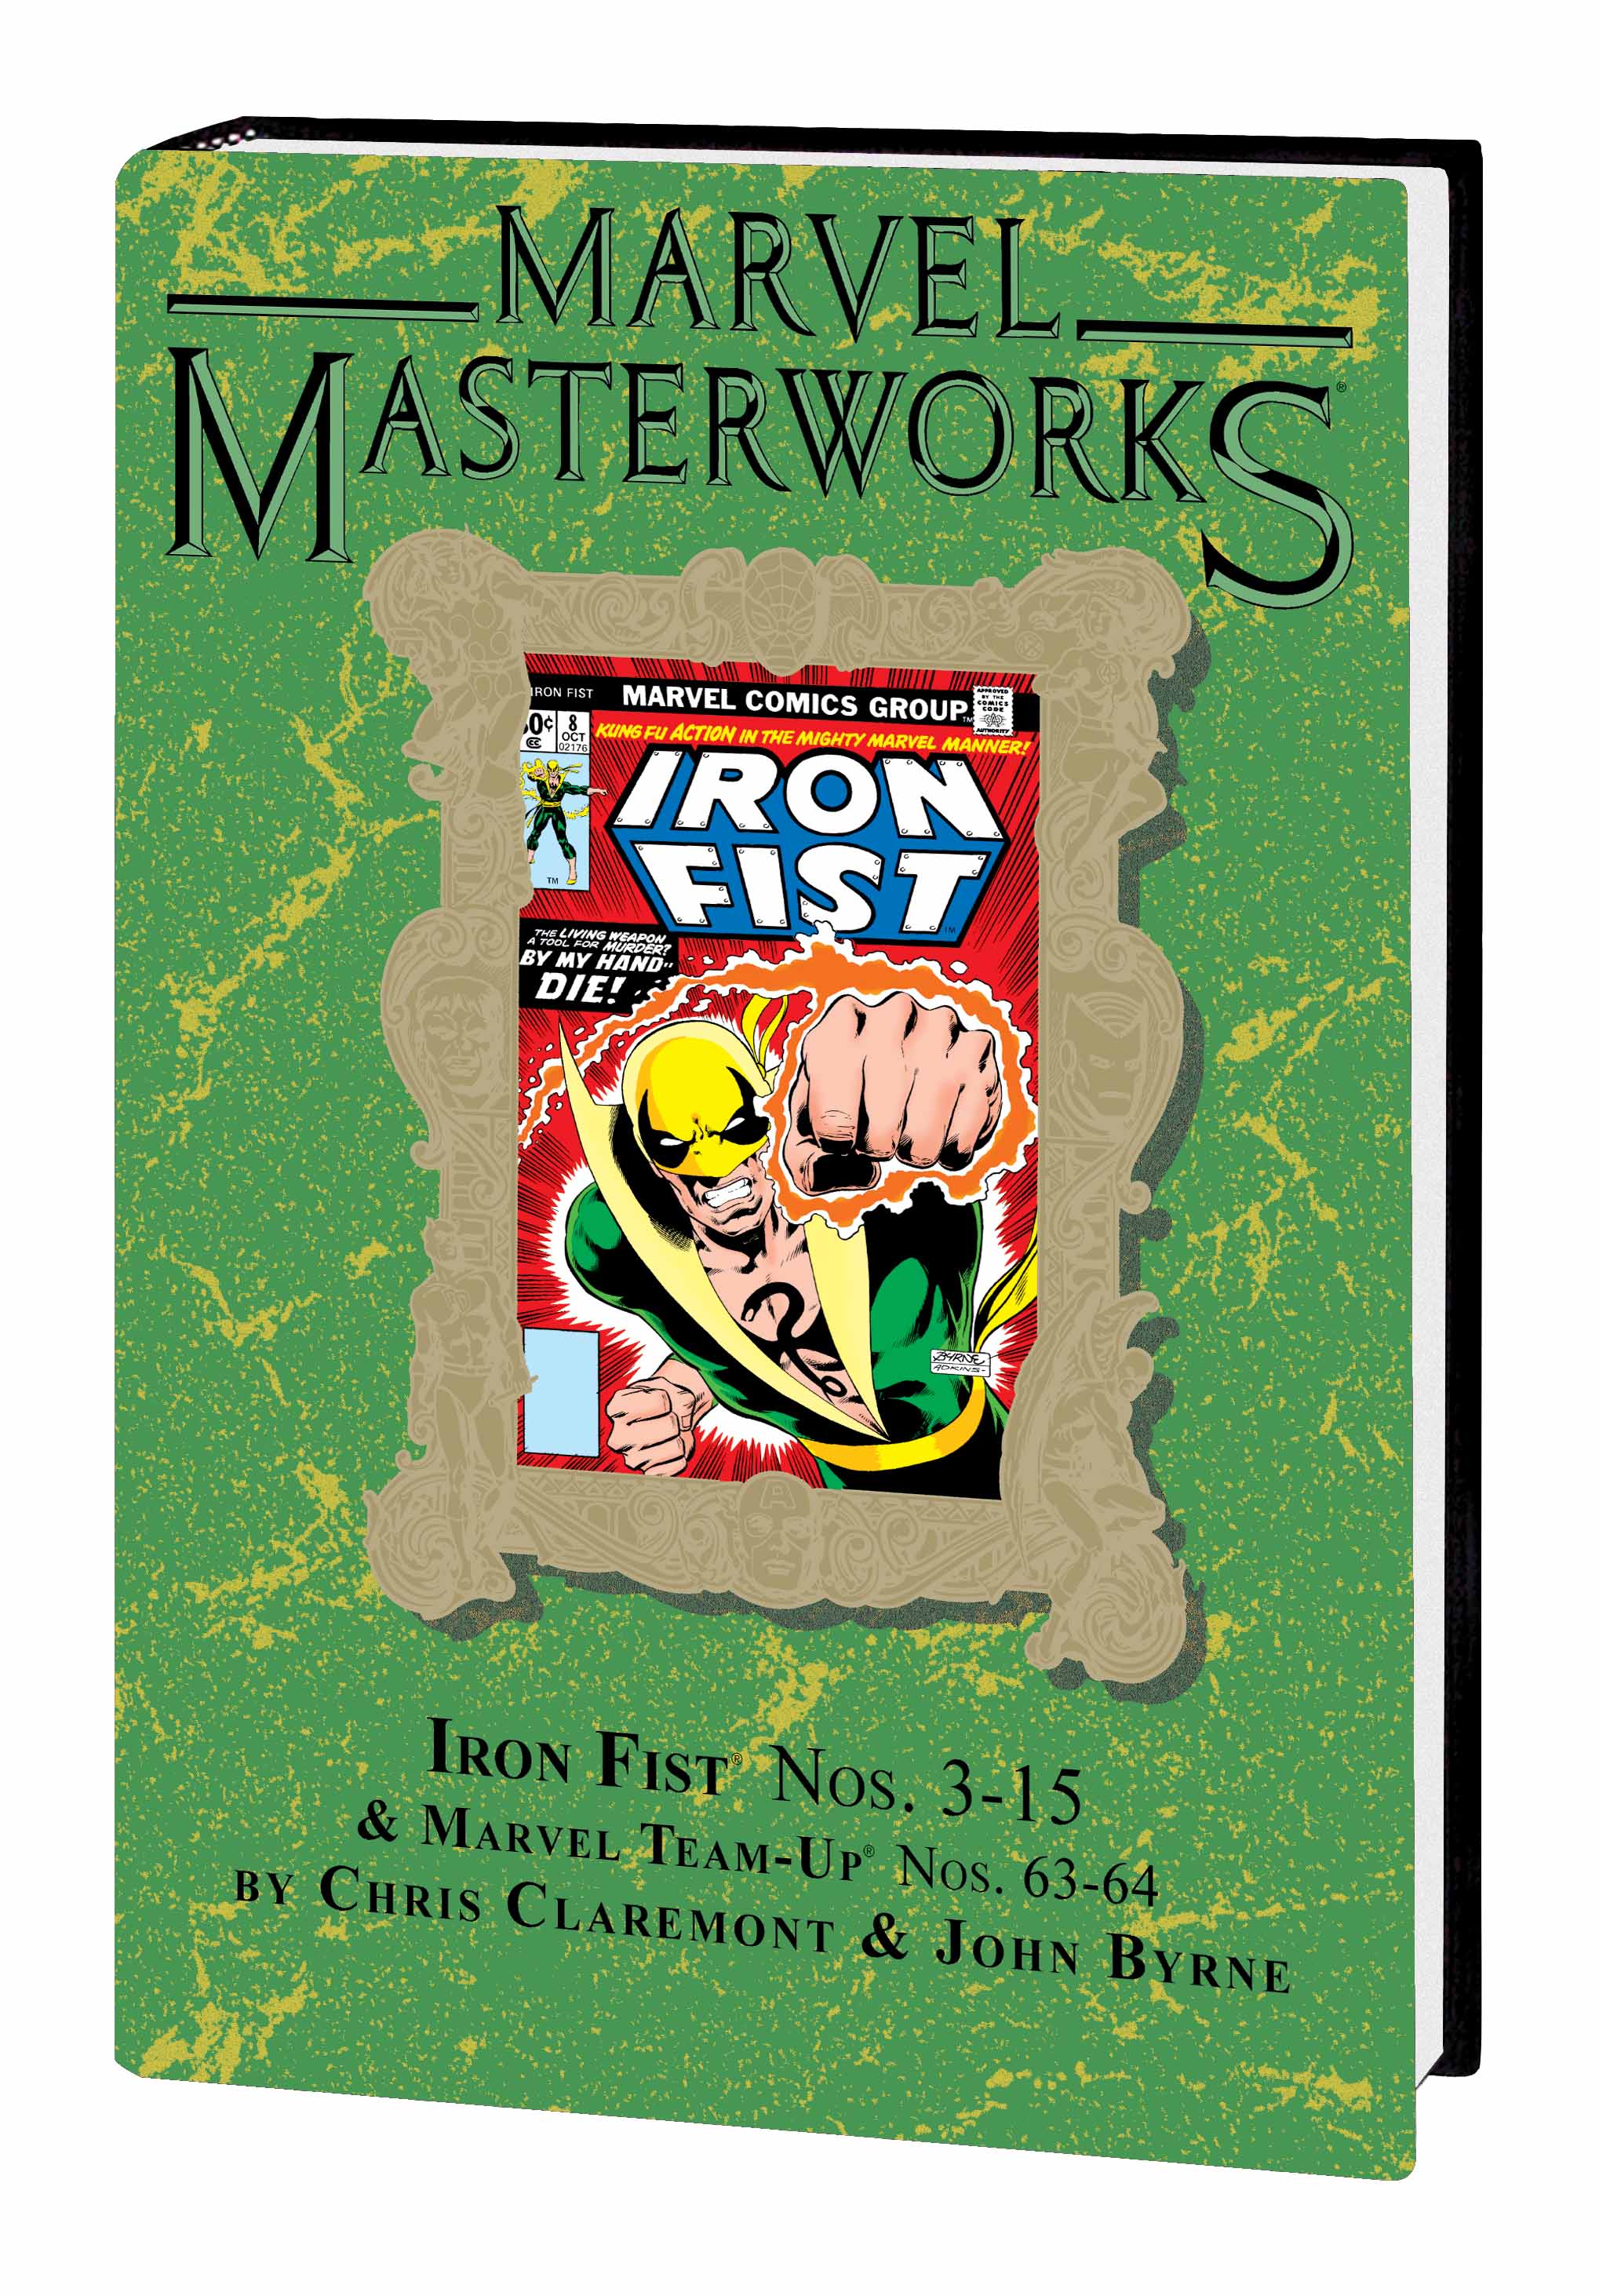 MARVEL MASTERWORKS: IRON FIST VOL. 2 HC VARIANT (Hardcover)